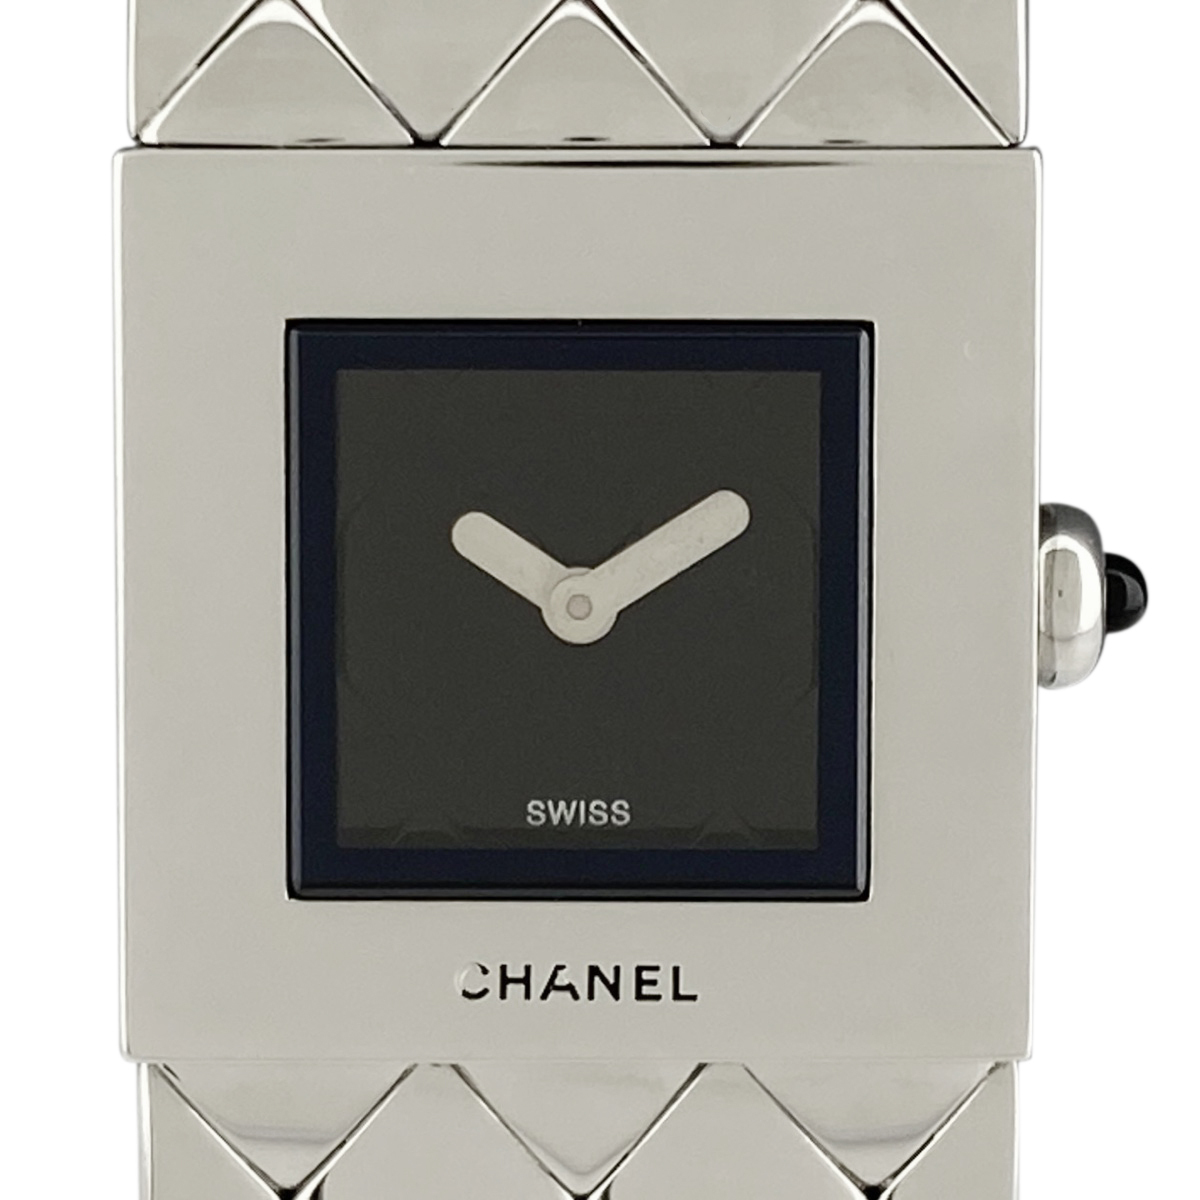  Chanel CHANEL matelasse H0009 wristwatch SS quartz black lady's [ used ]